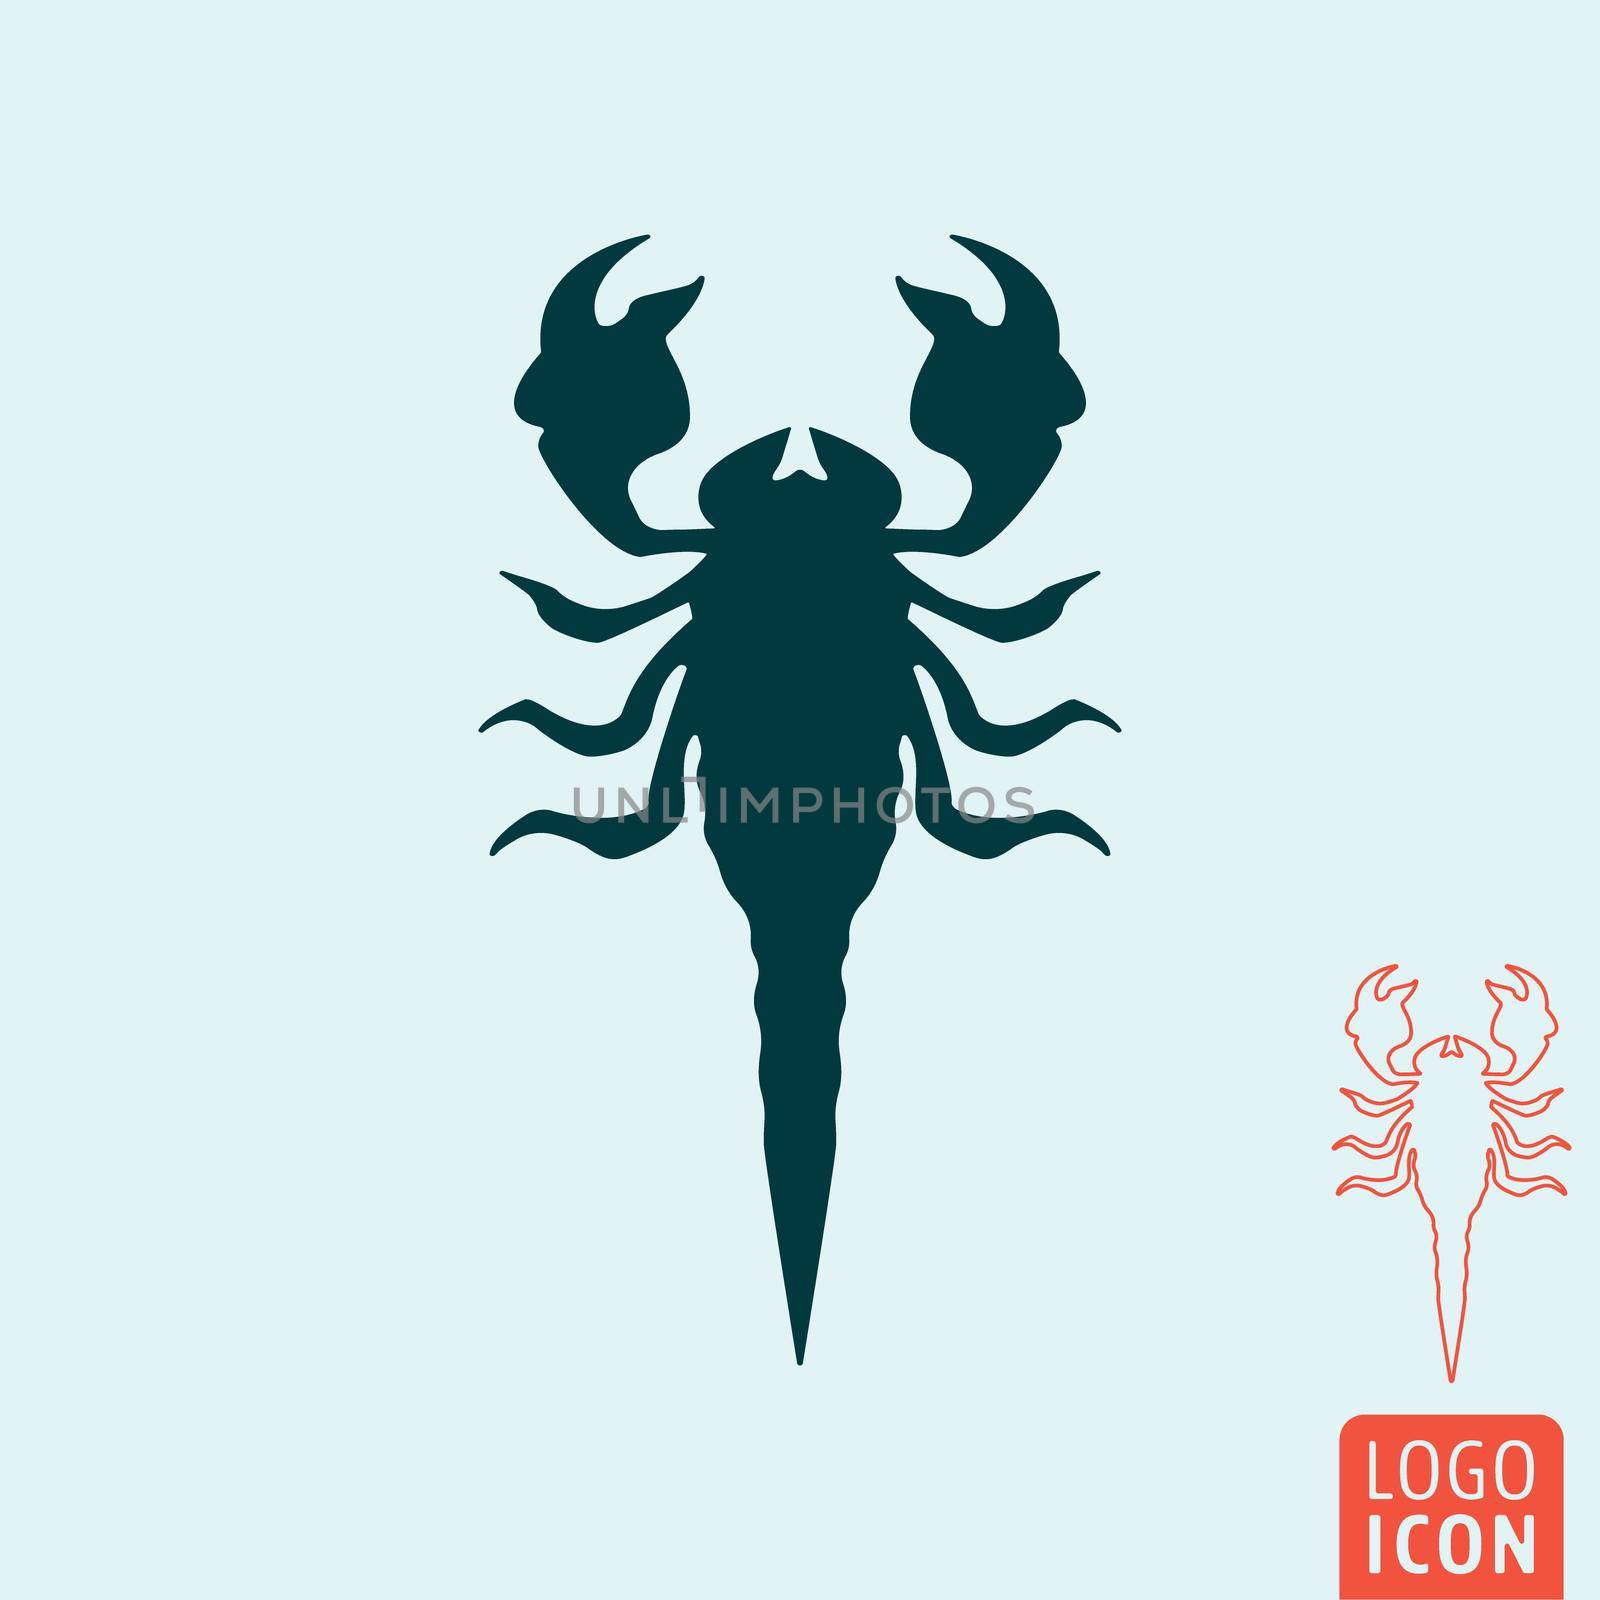 Scorpion icon. Scorpion logo. Scorpion symbol. Silhouette of scorpion icon isolated, minimal design. Vector illustration